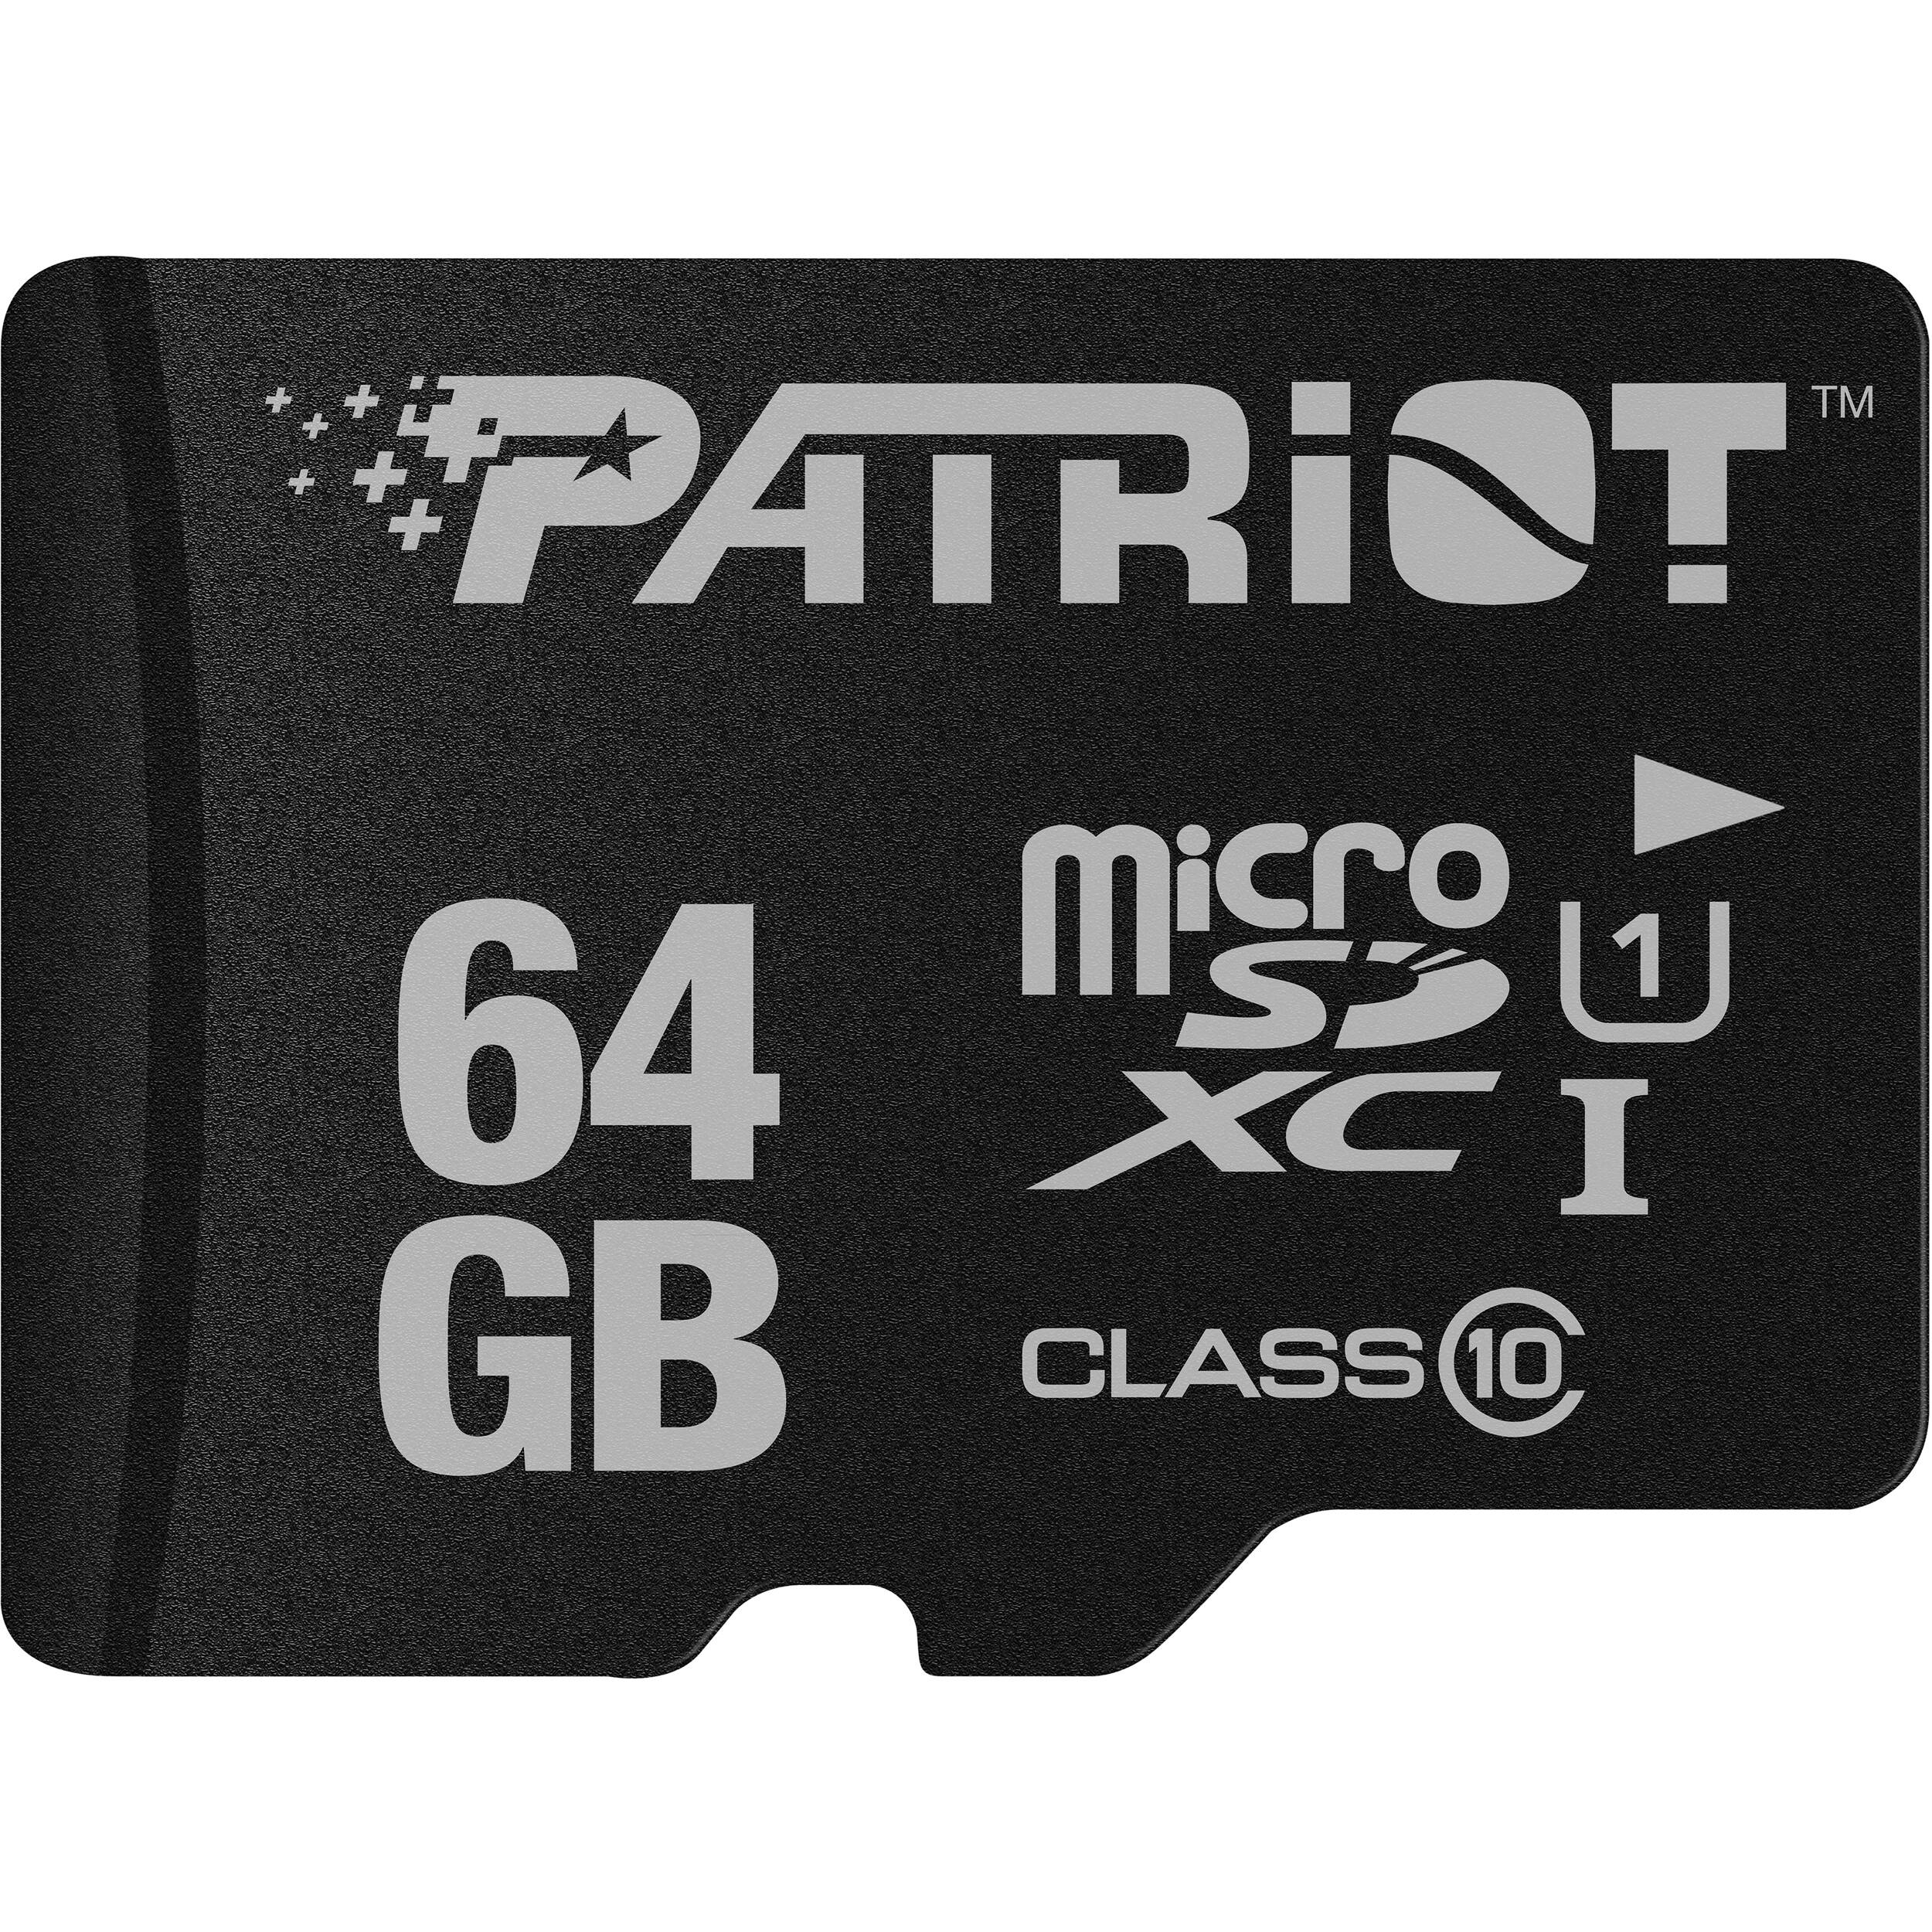 Памяти 64 128 гб. Карта памяти Patriot Memory psf64gmcsdxc10. Карта памяти Patriot LX MICROSDXC 128. Карта памяти Patriot Memory psf128mcsd. Patriot MICROSD 64.